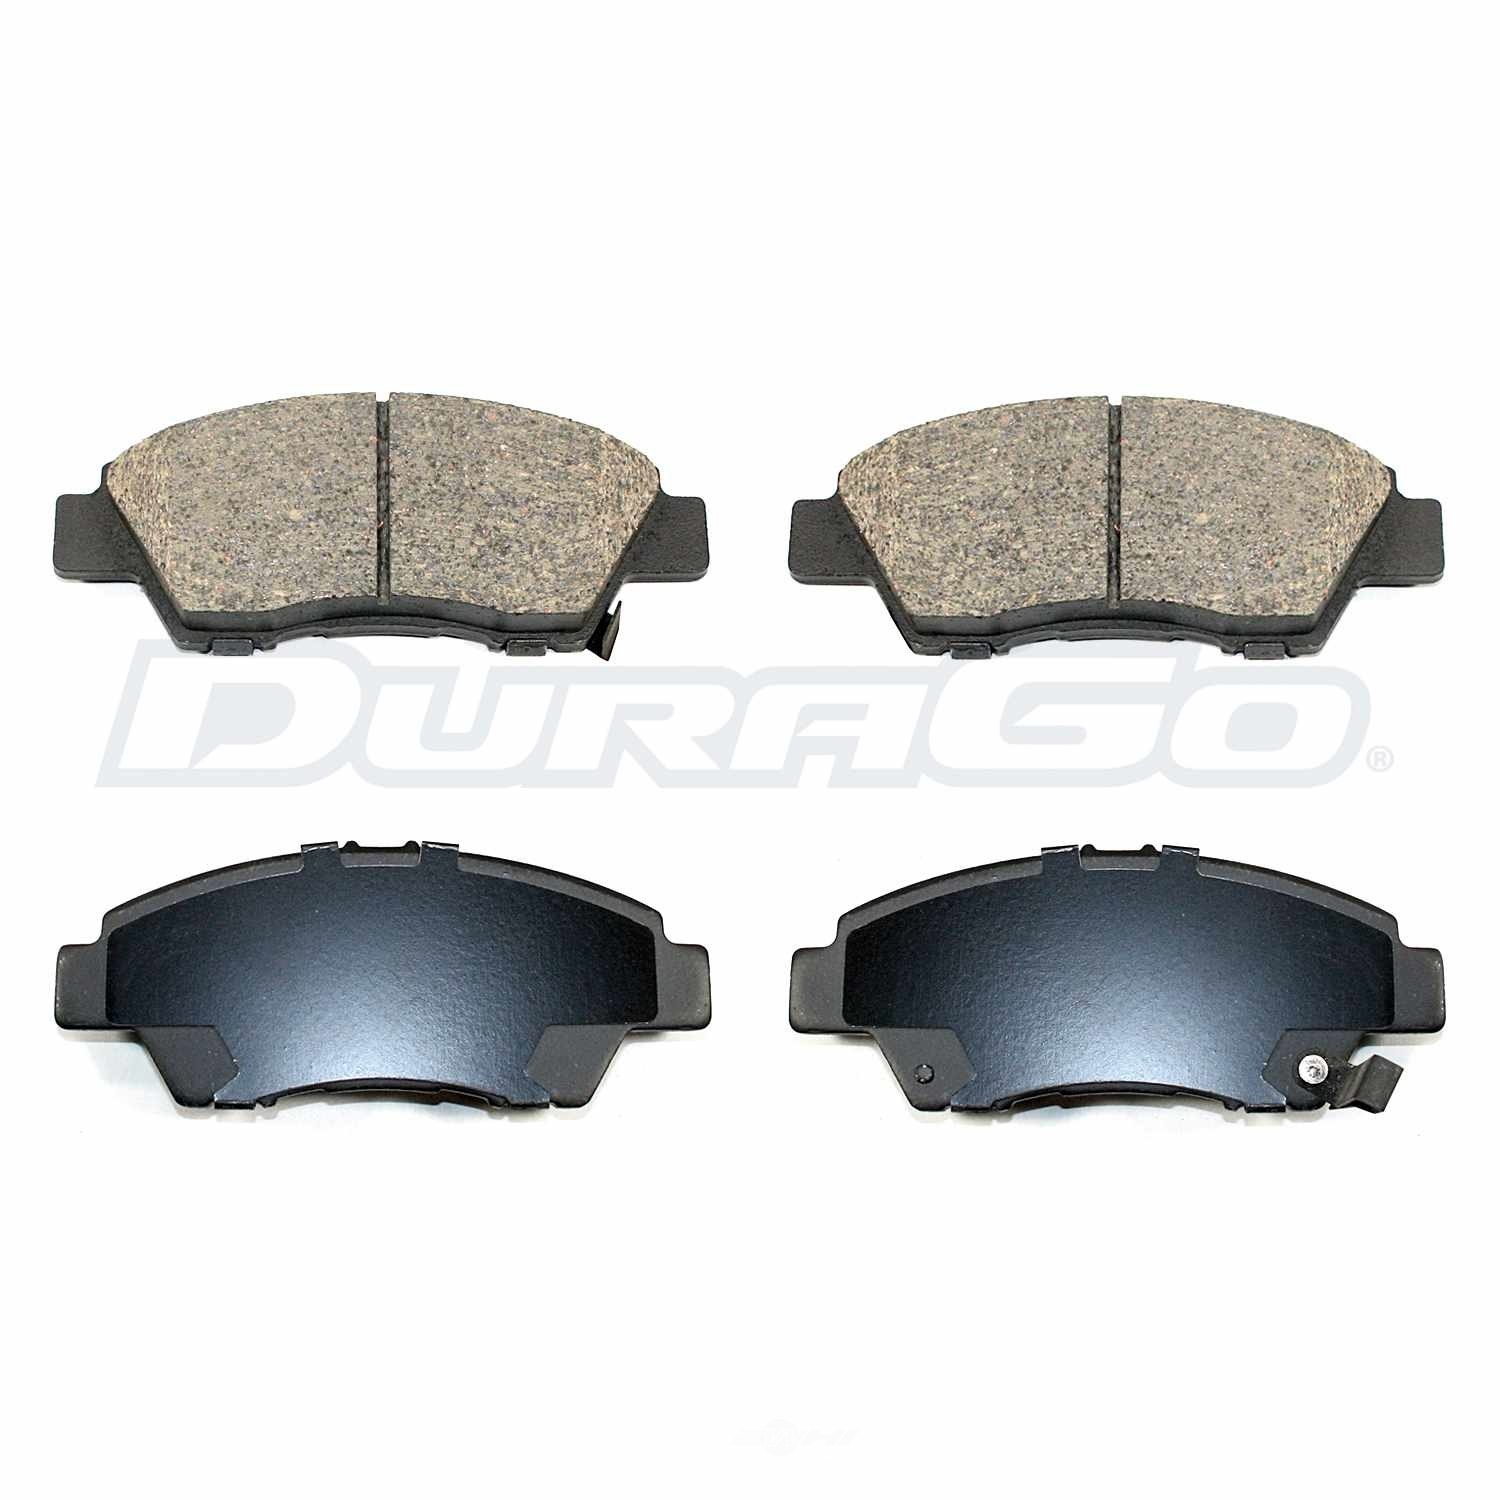 DURAGO - Disc Brake Pad (Front) - D48 BP1394C